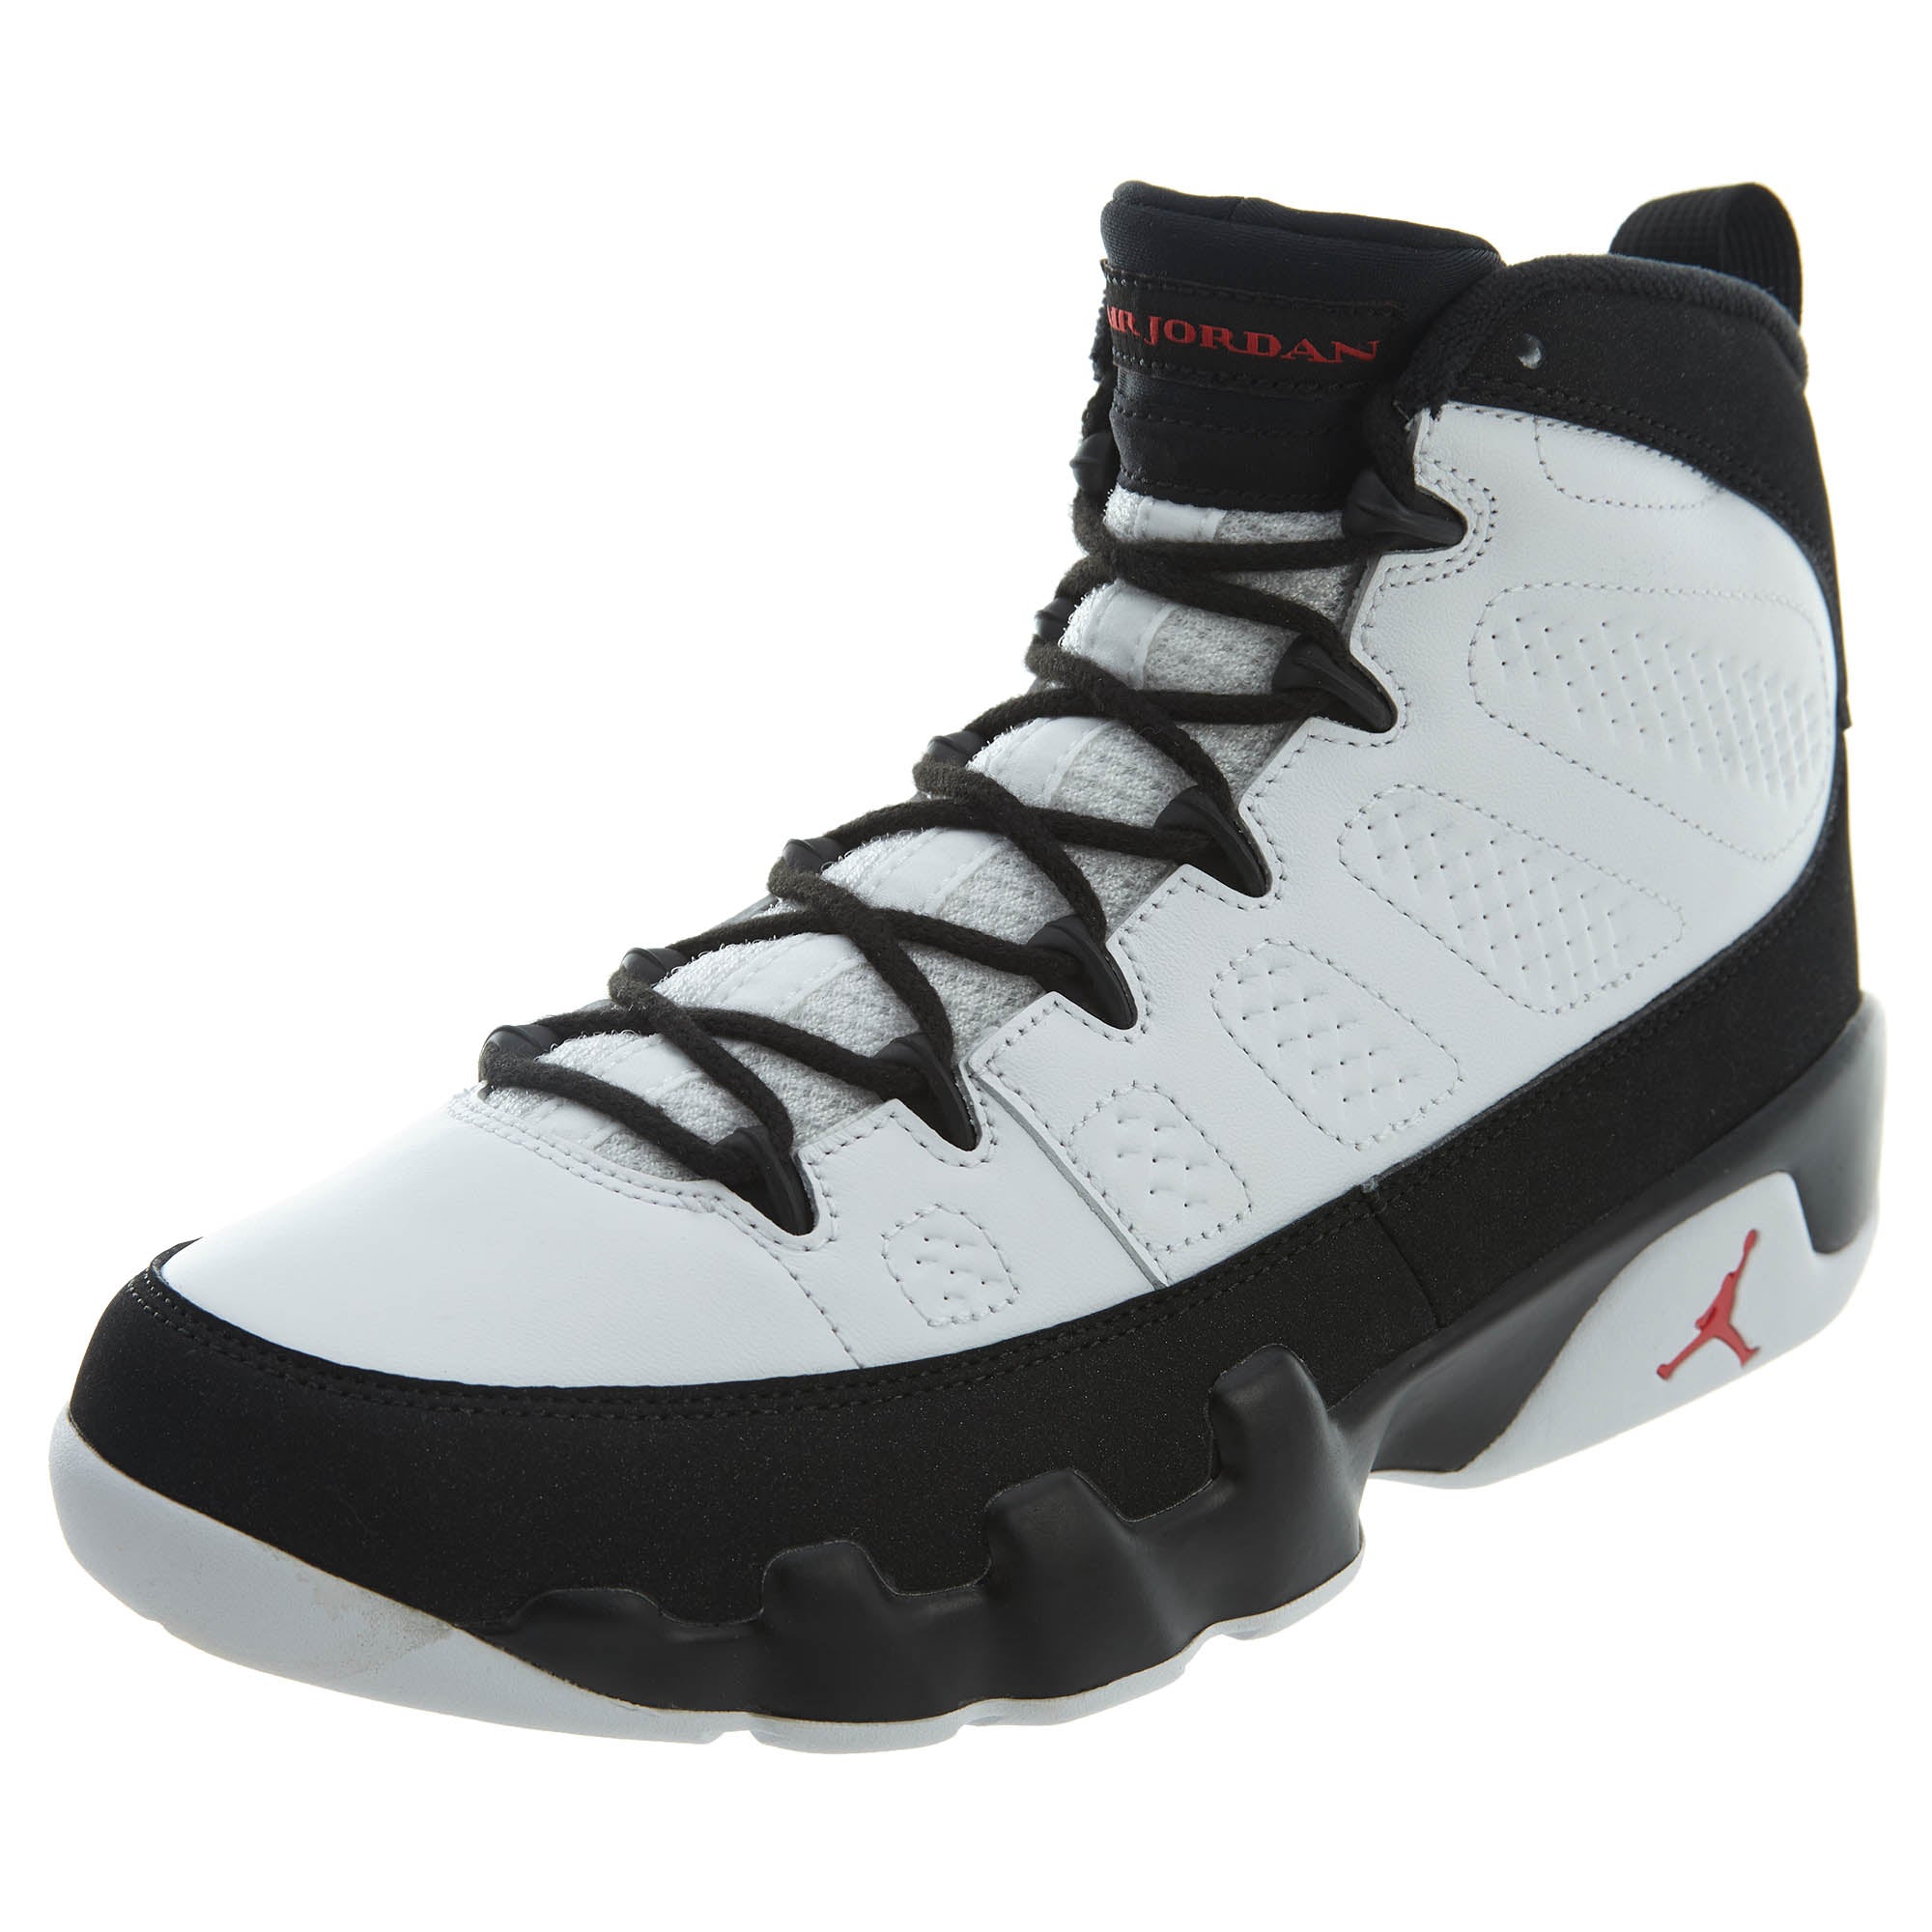 Air Jordan 9 Retro Basketball Shoes Men's Style #302370-112